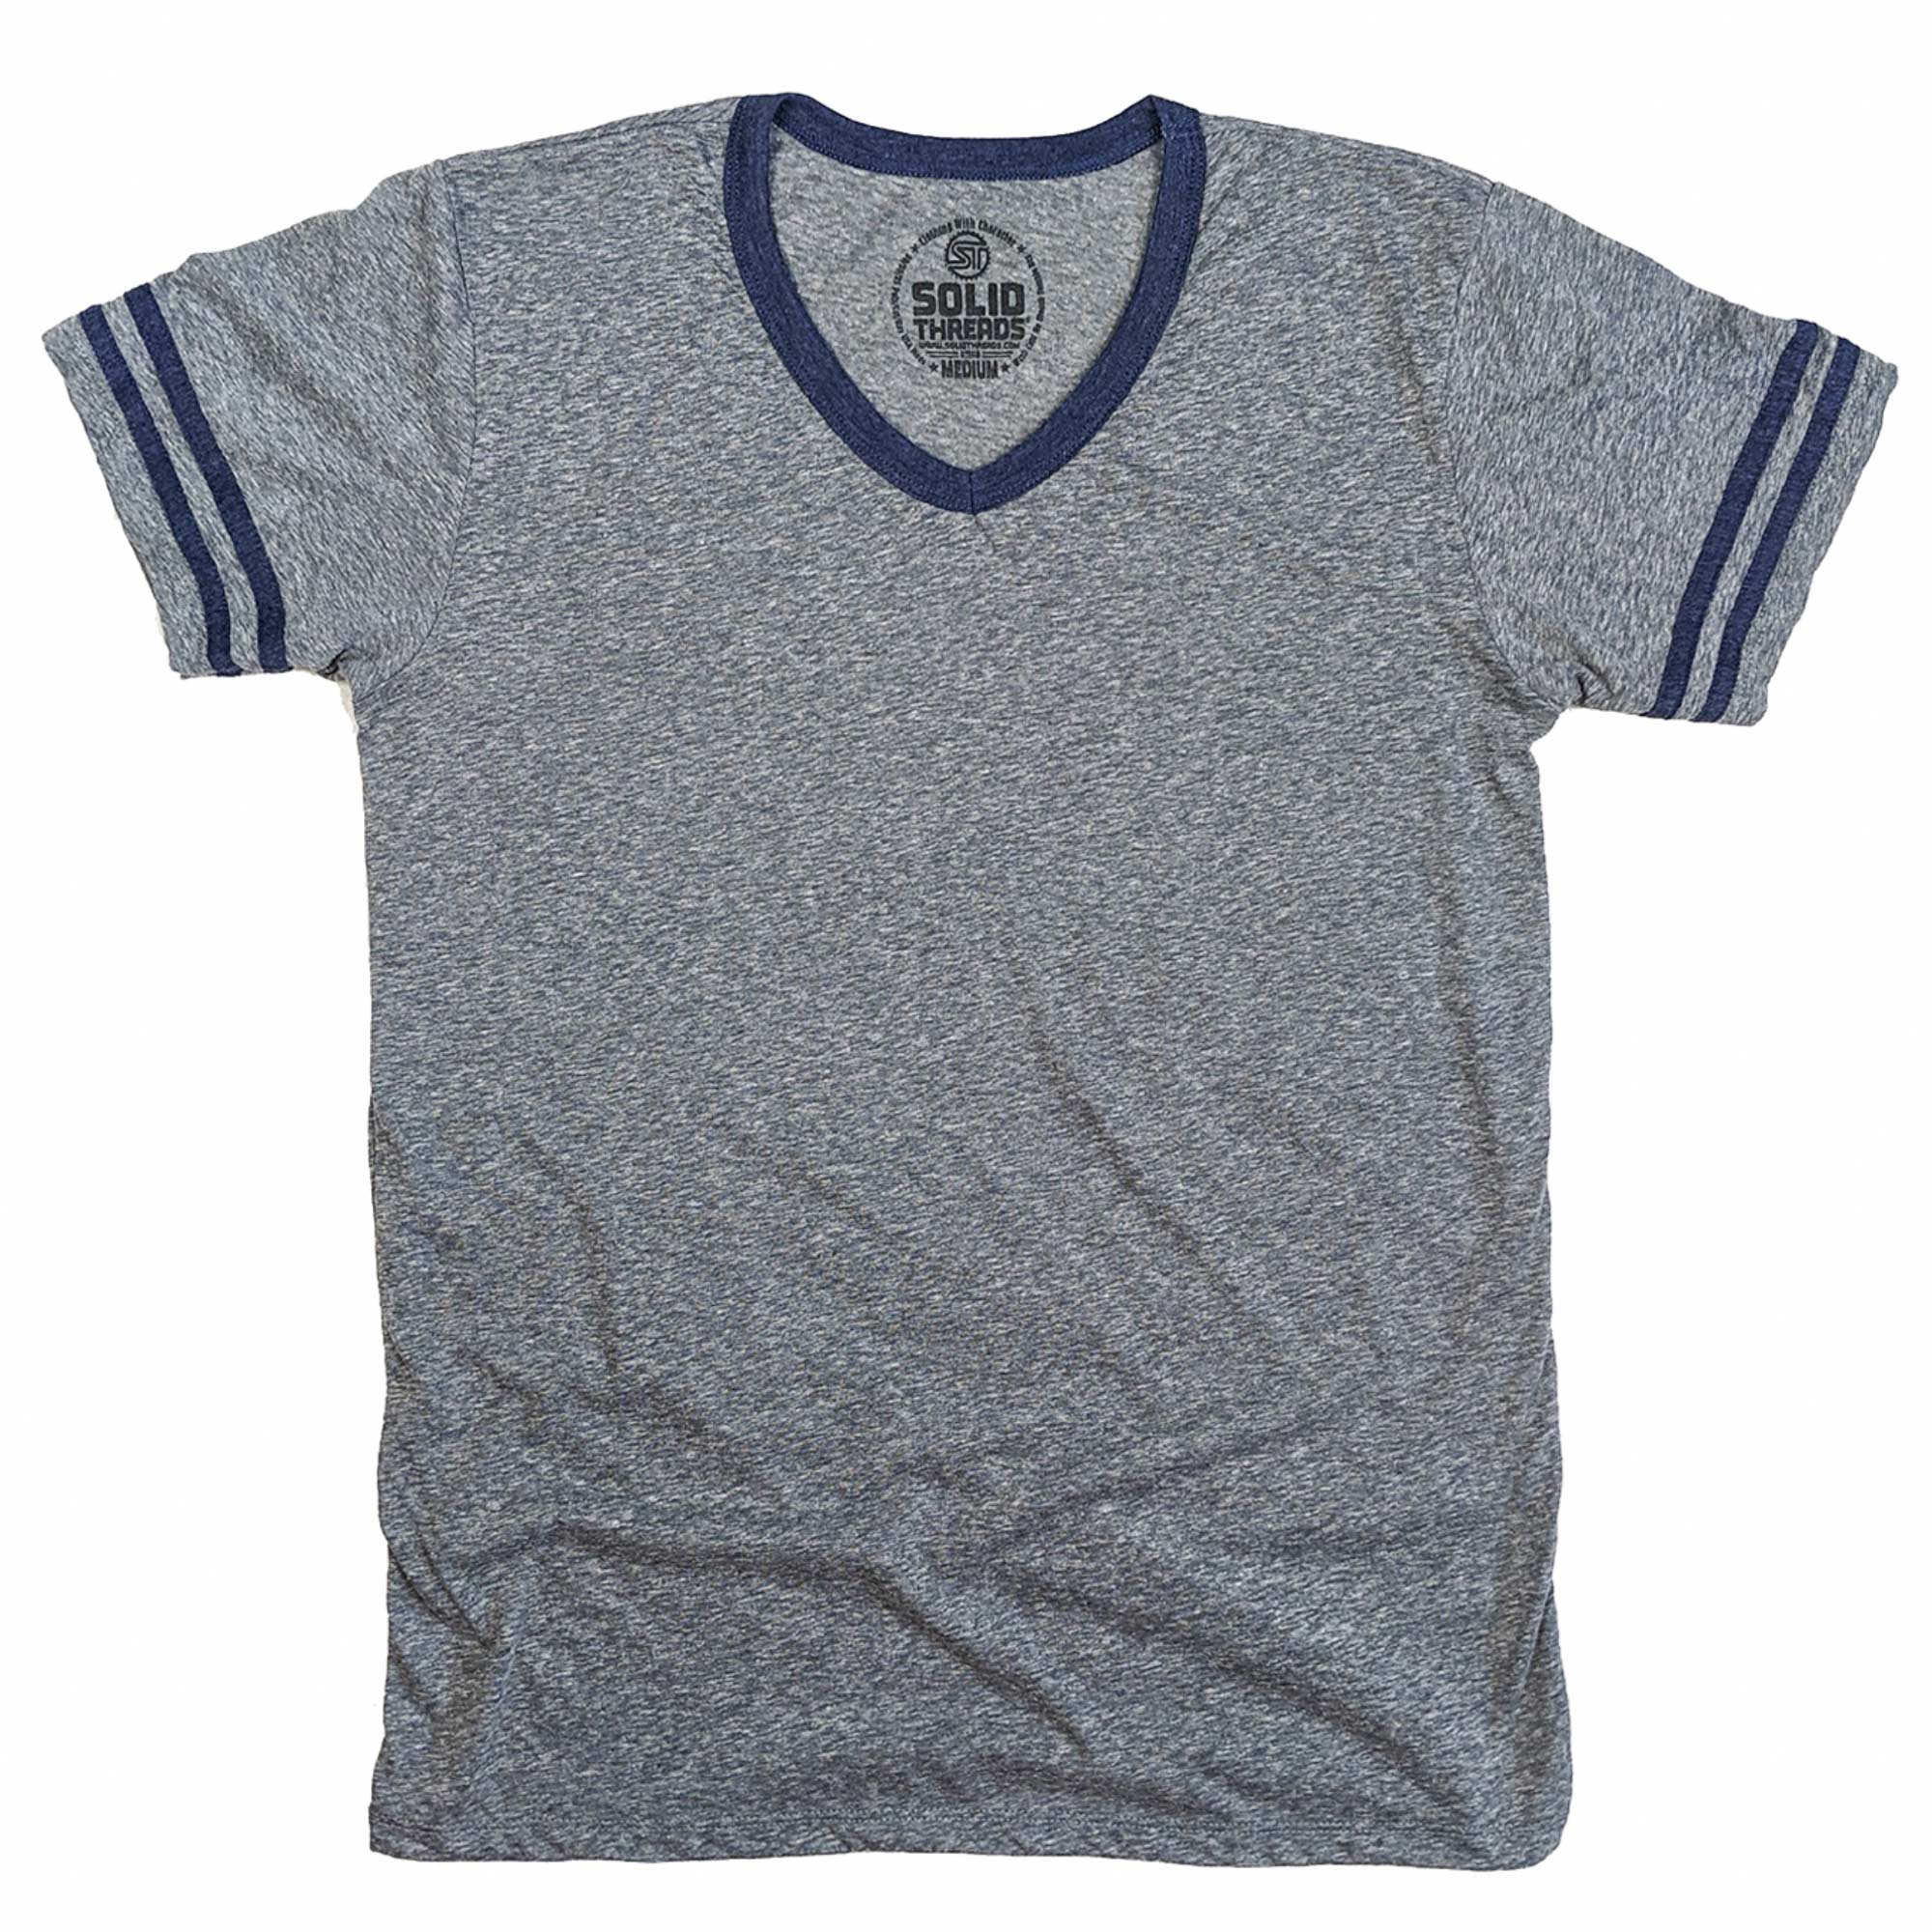 Men's Retro Ringer V-neck T-shirt Triblend Grey/Navy | Super Soft Vintage Inspired Tee | USA Made